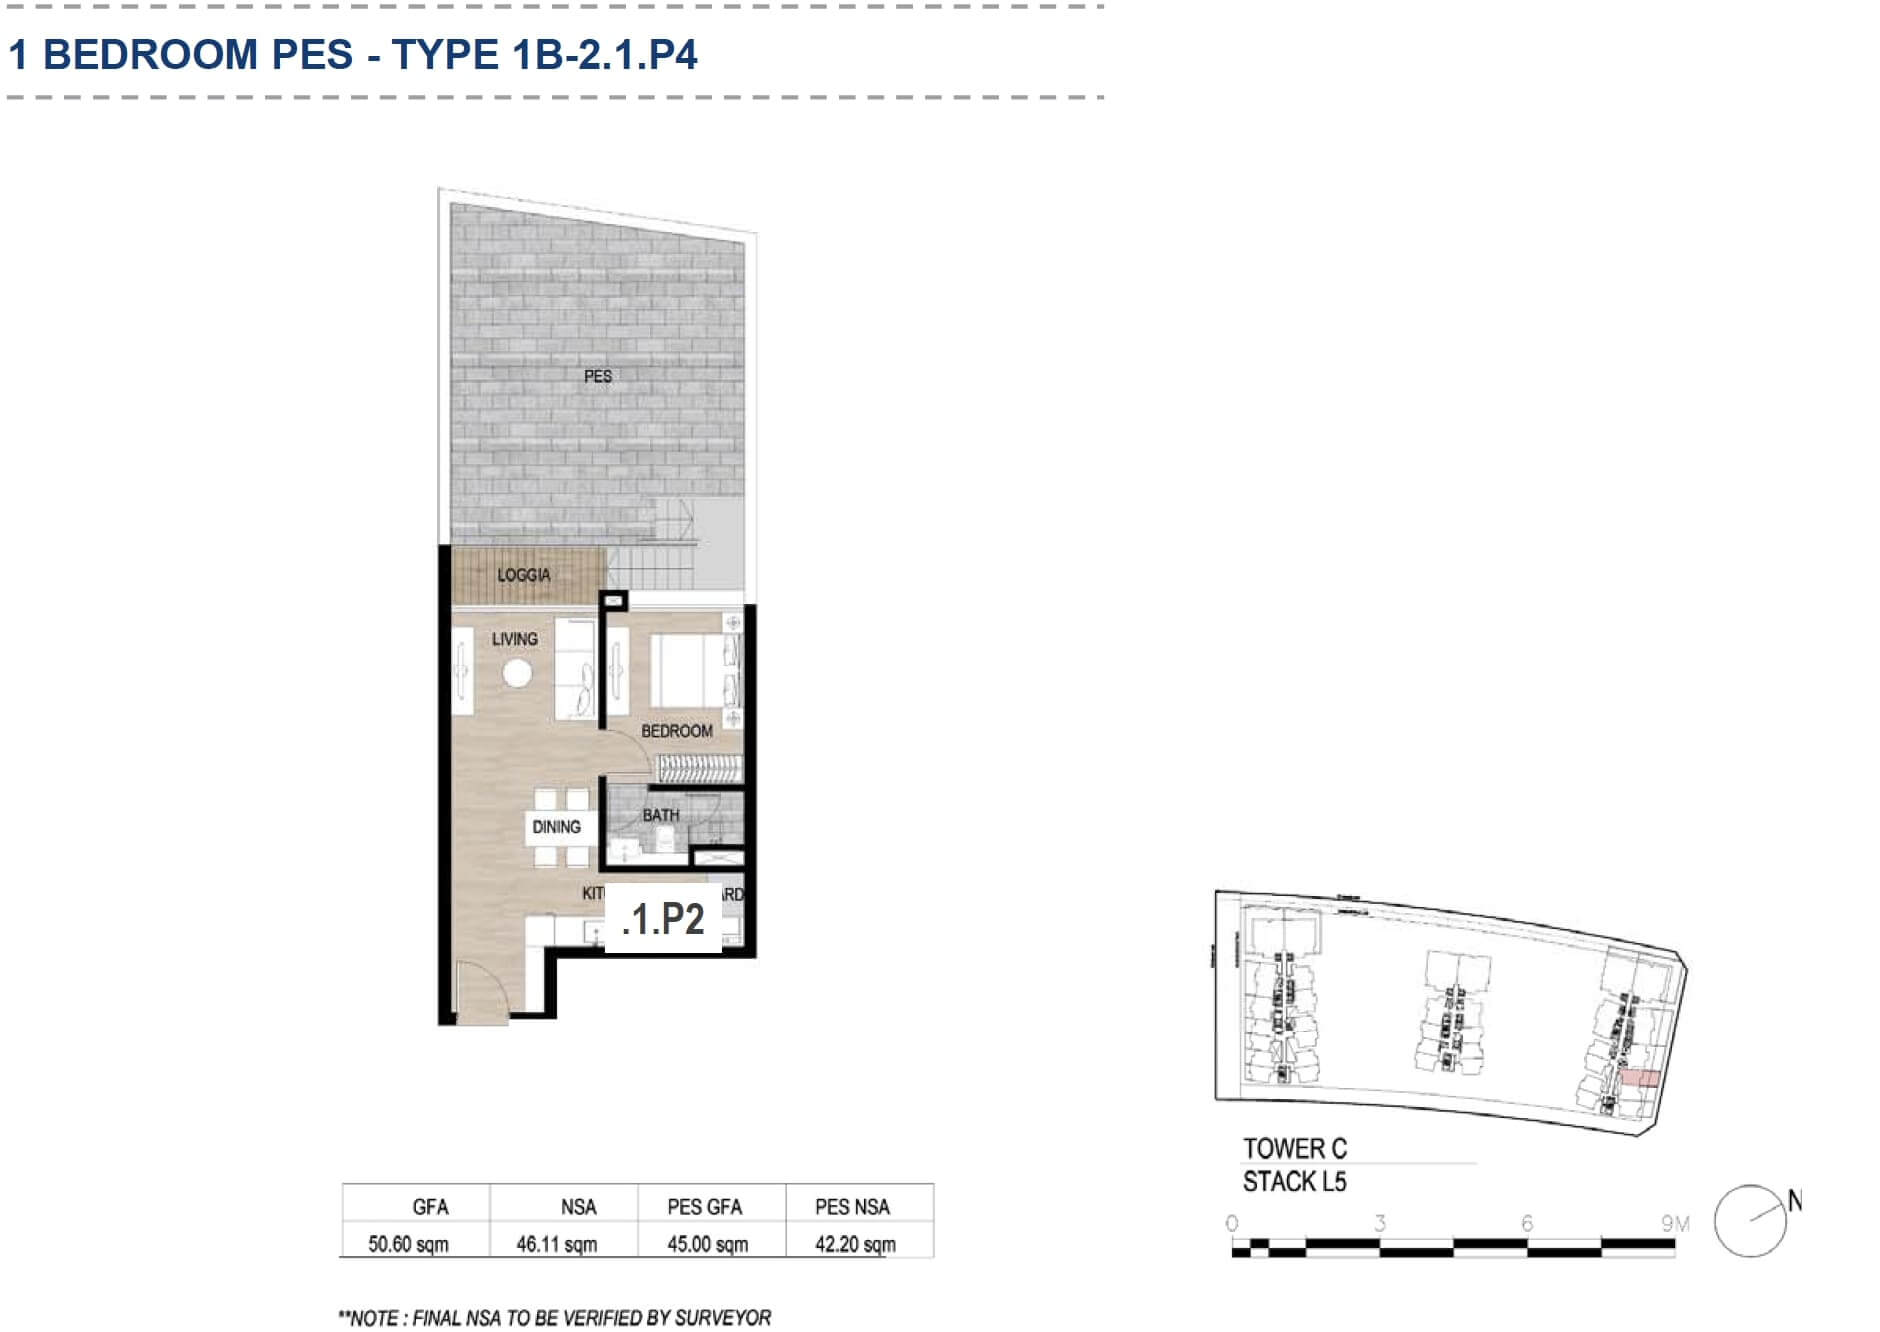 Floor plan of Metropole Thu Thiem garden apartment 5